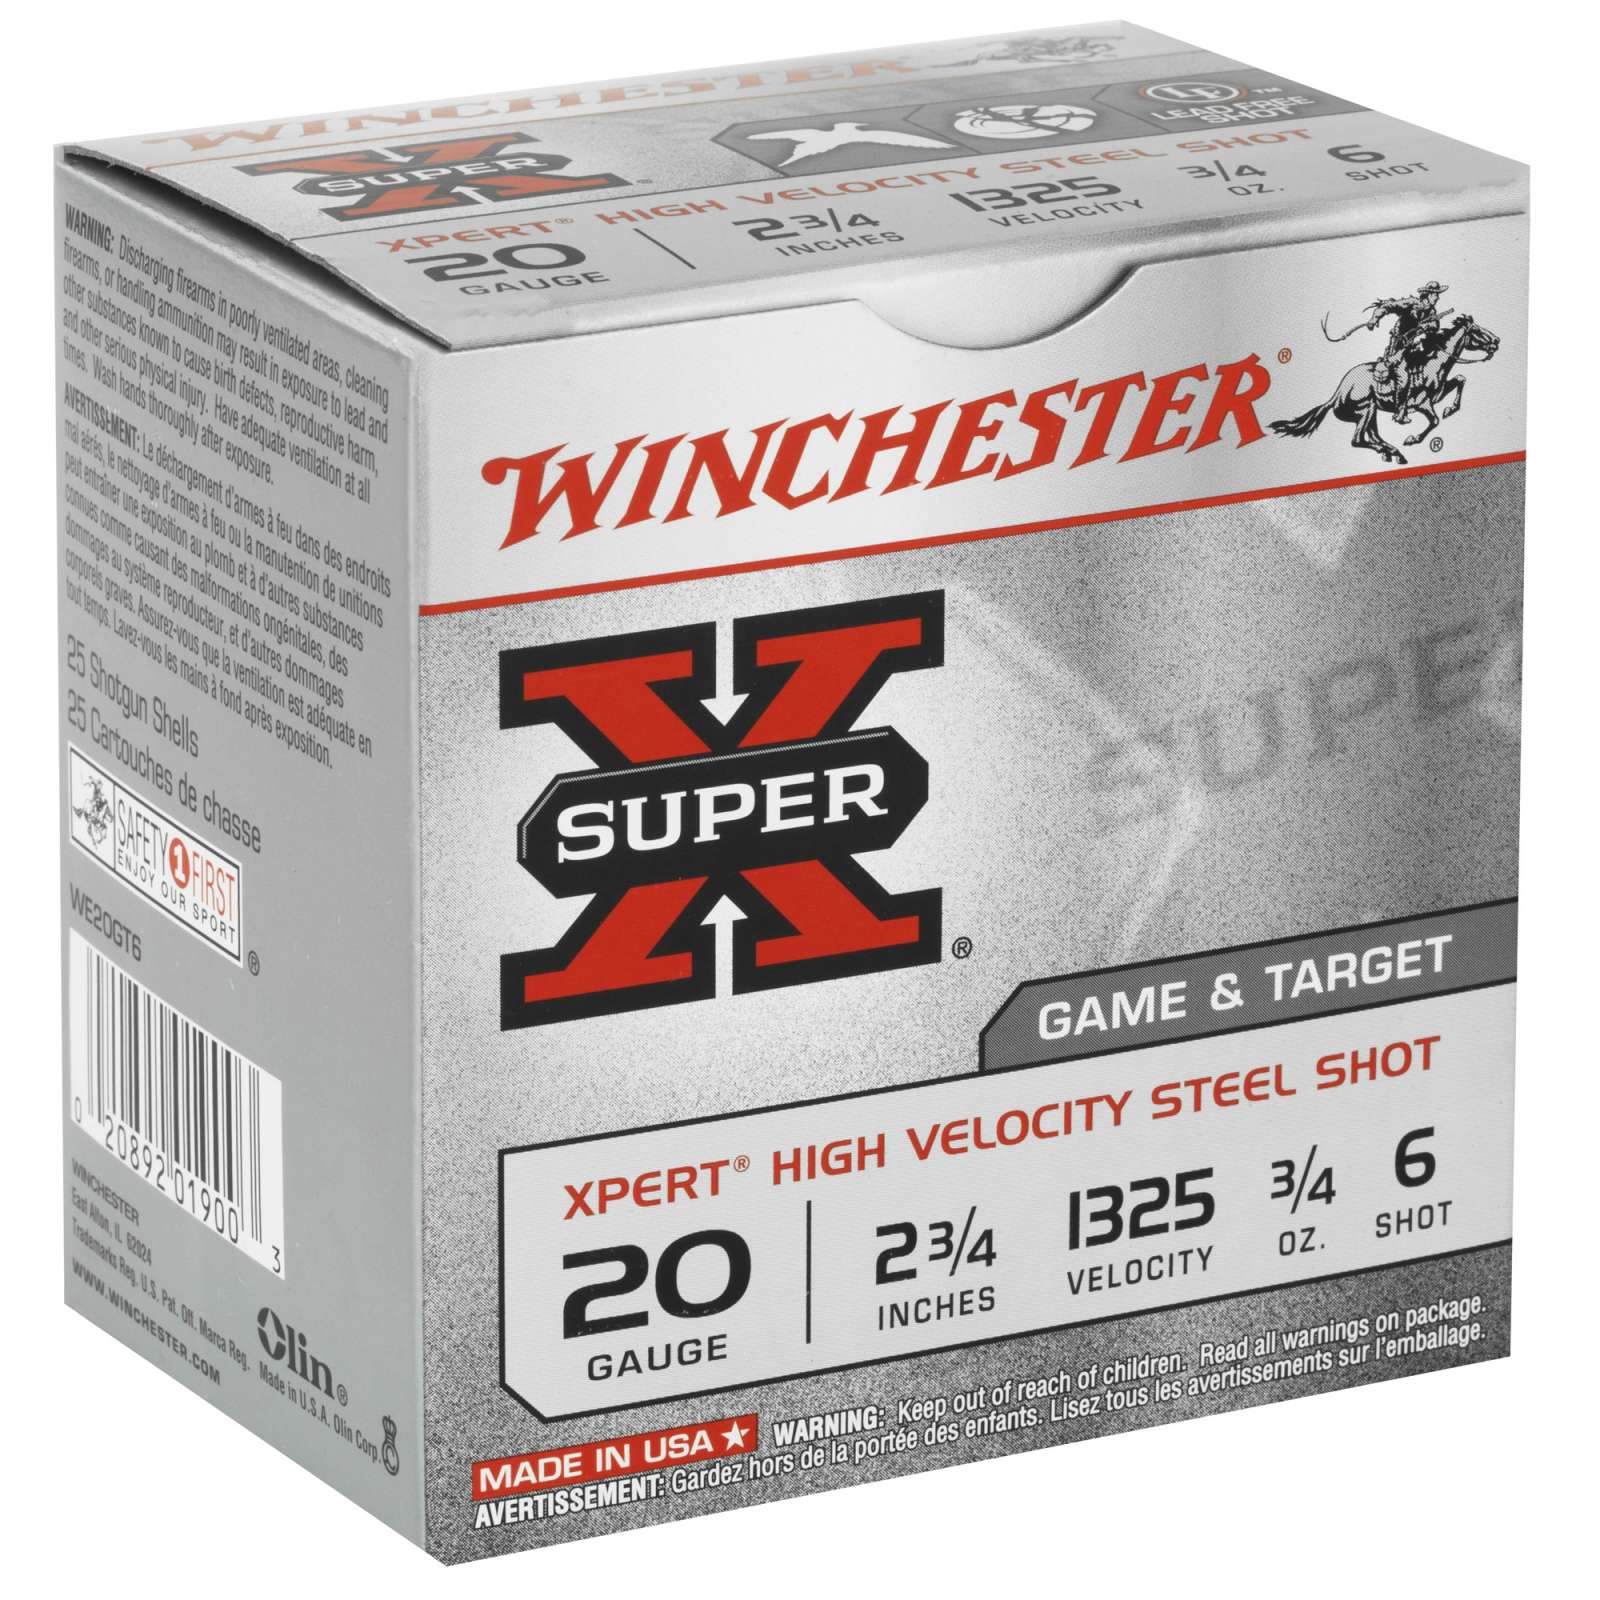 Winchester Xpert Hi-Velocity Game and Target Steel Shotshells